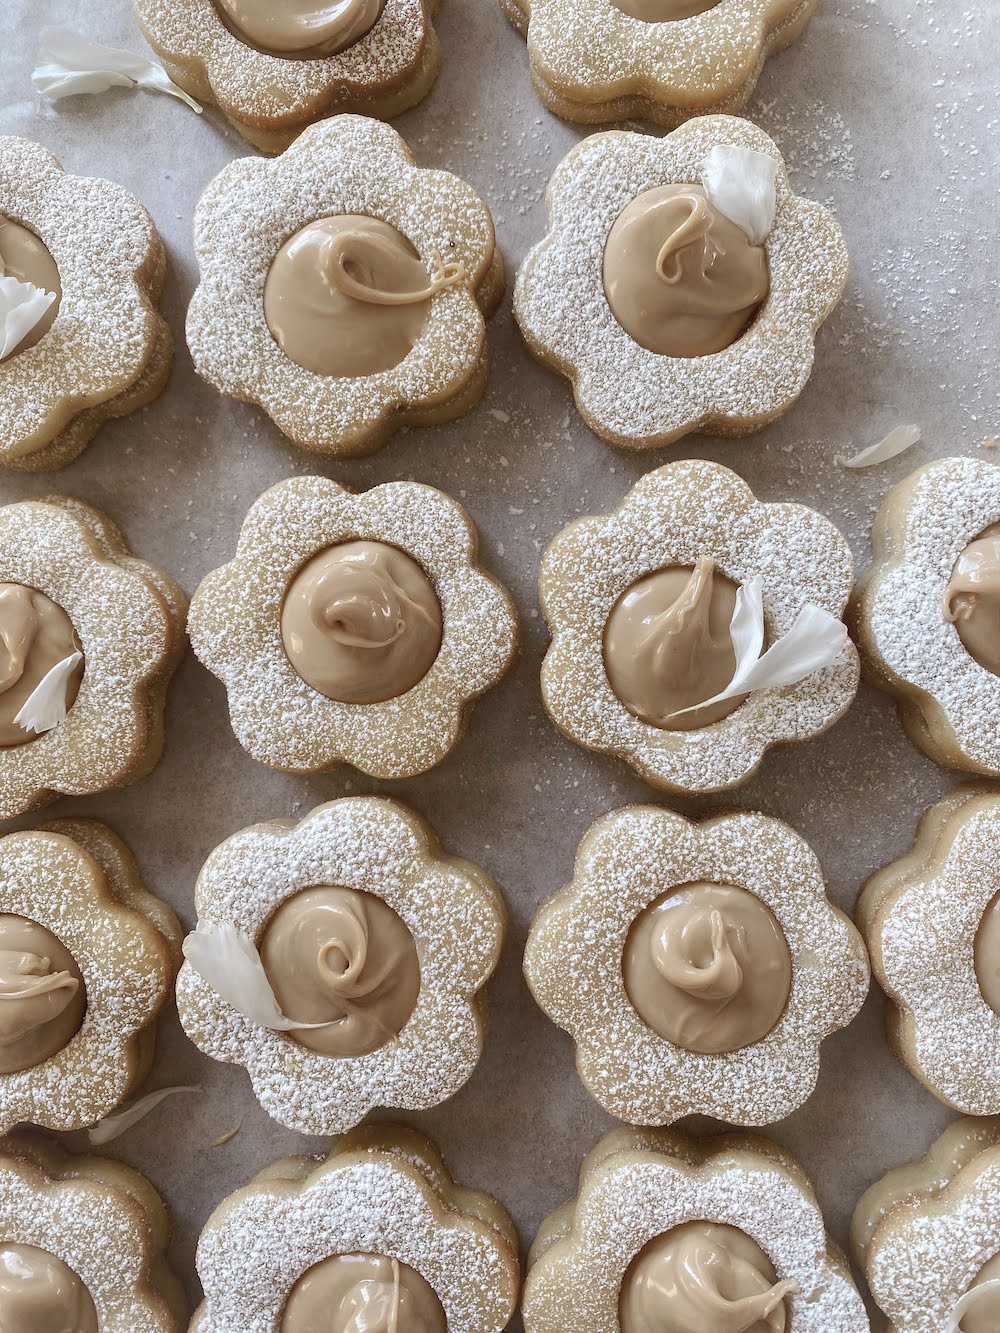 Elizabeth Ho Shares Her Favourite Linzer Cookie Recipe